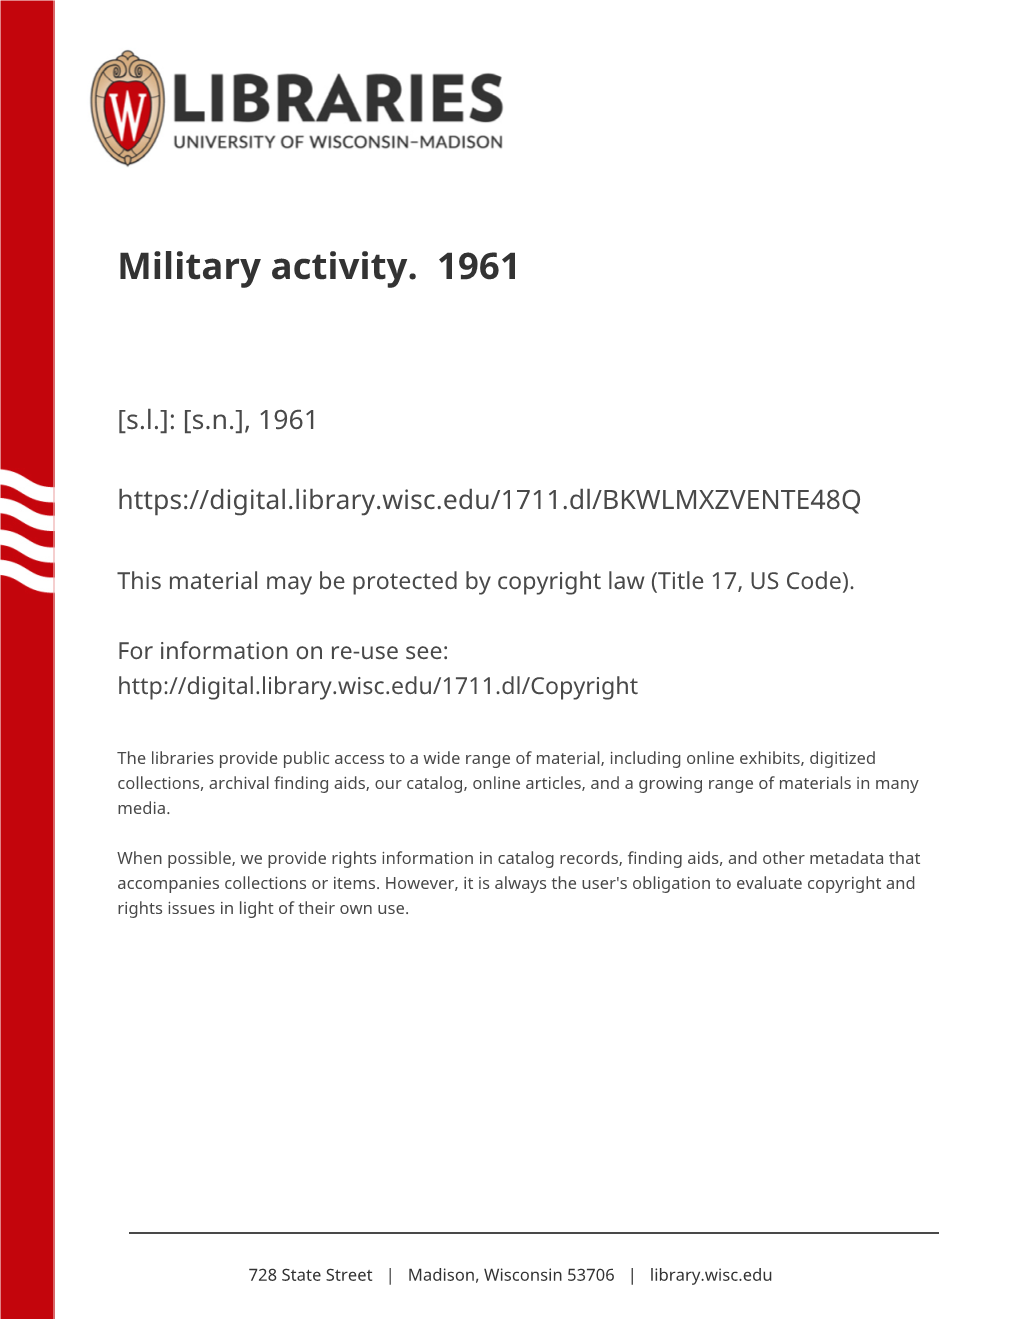 Military Activity. 1961